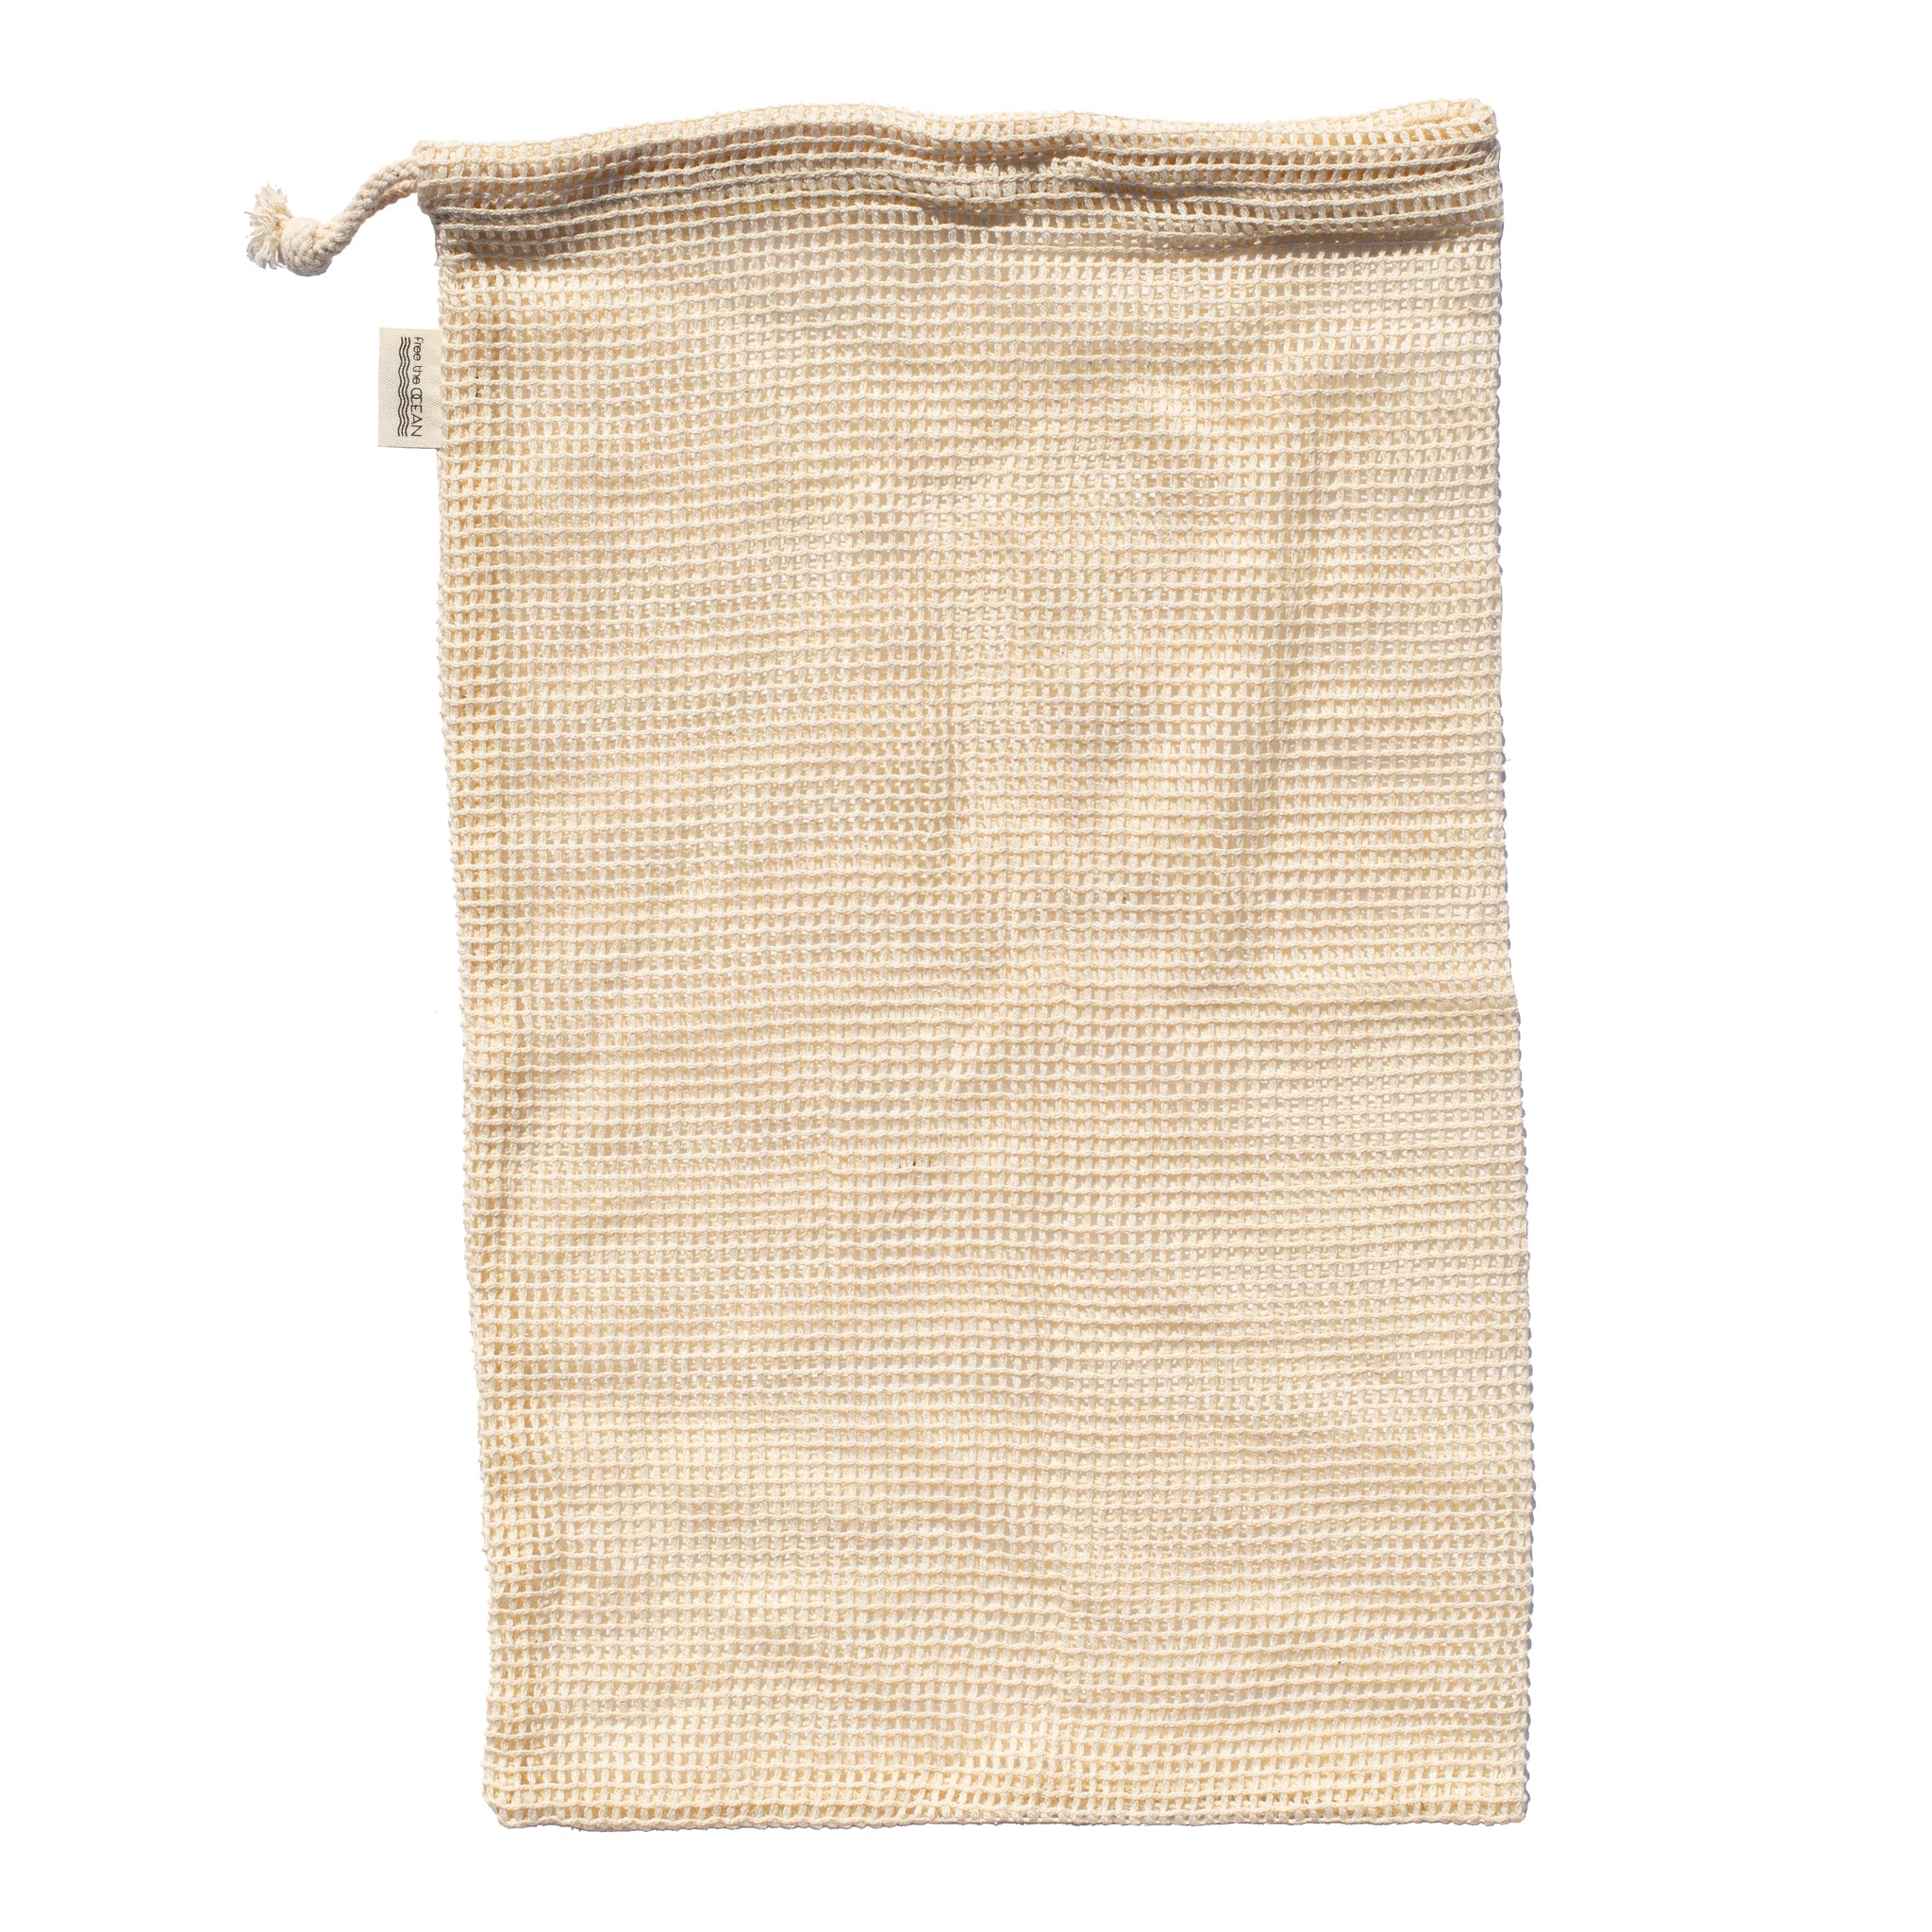 FTO Cotton Mesh Produce Bags - Set of 3